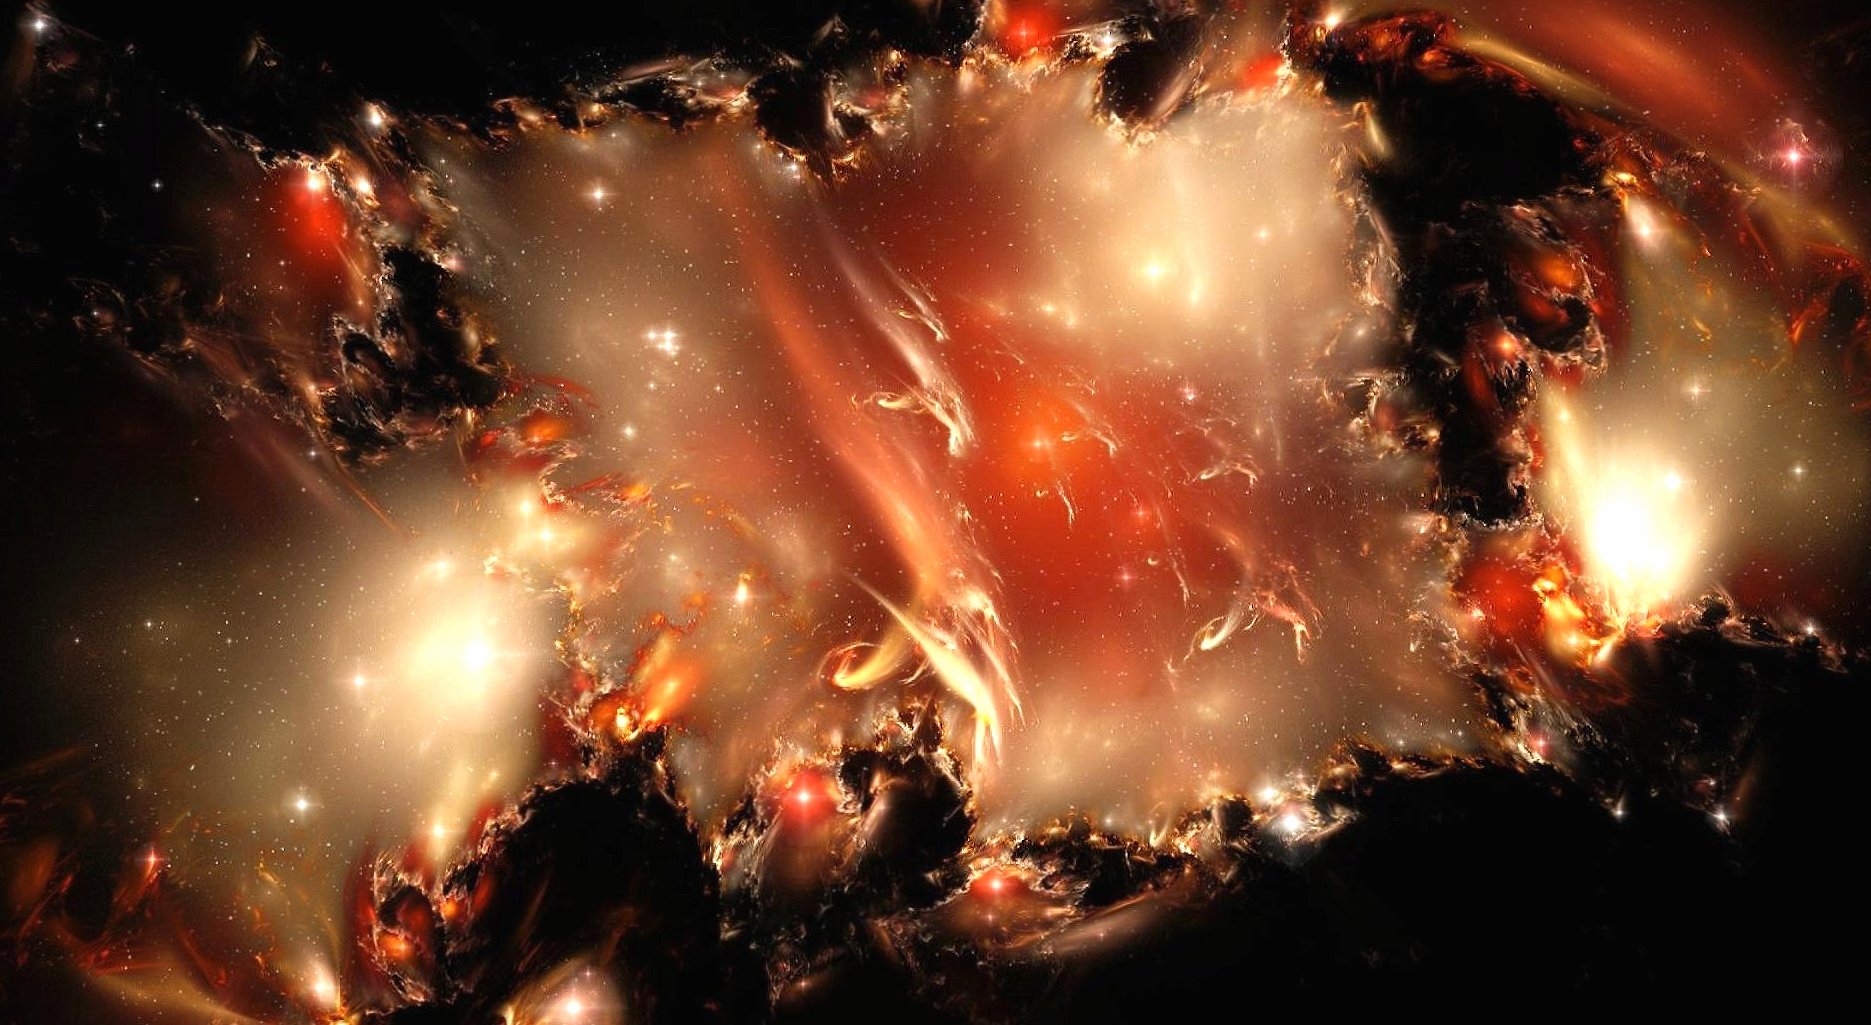 Hot nebula at 1280 x 960 size wallpapers HD quality